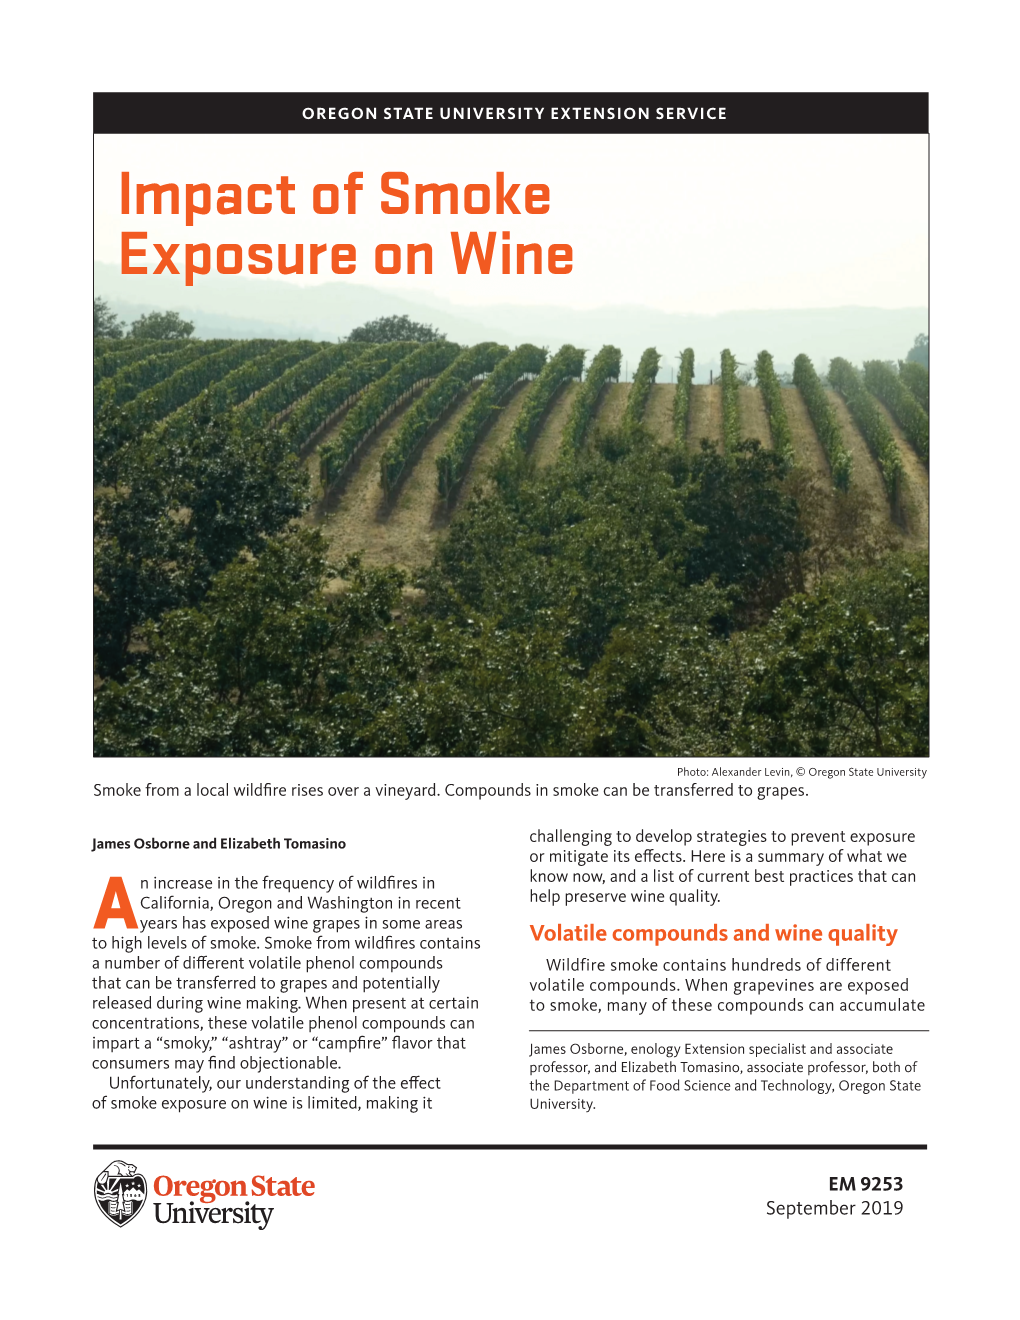 Assessing the Impact of Smoke Exposure on Wine